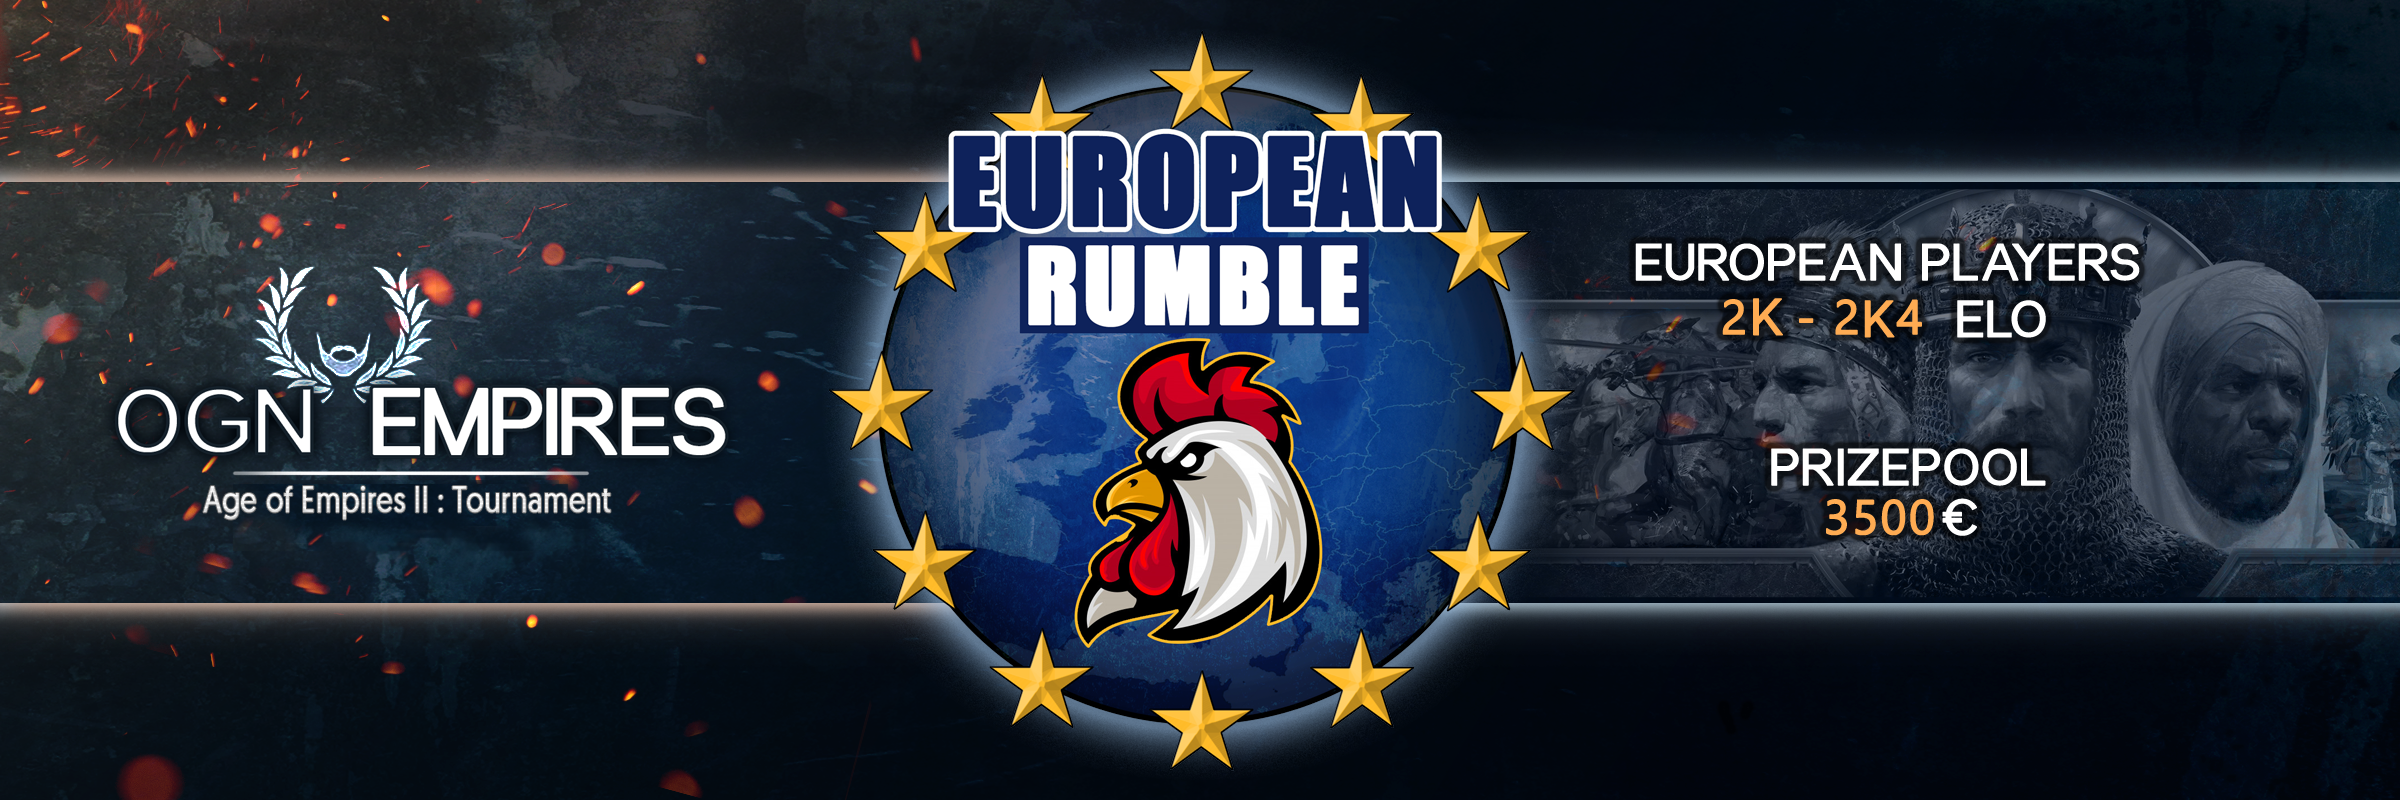 european Rumble.png